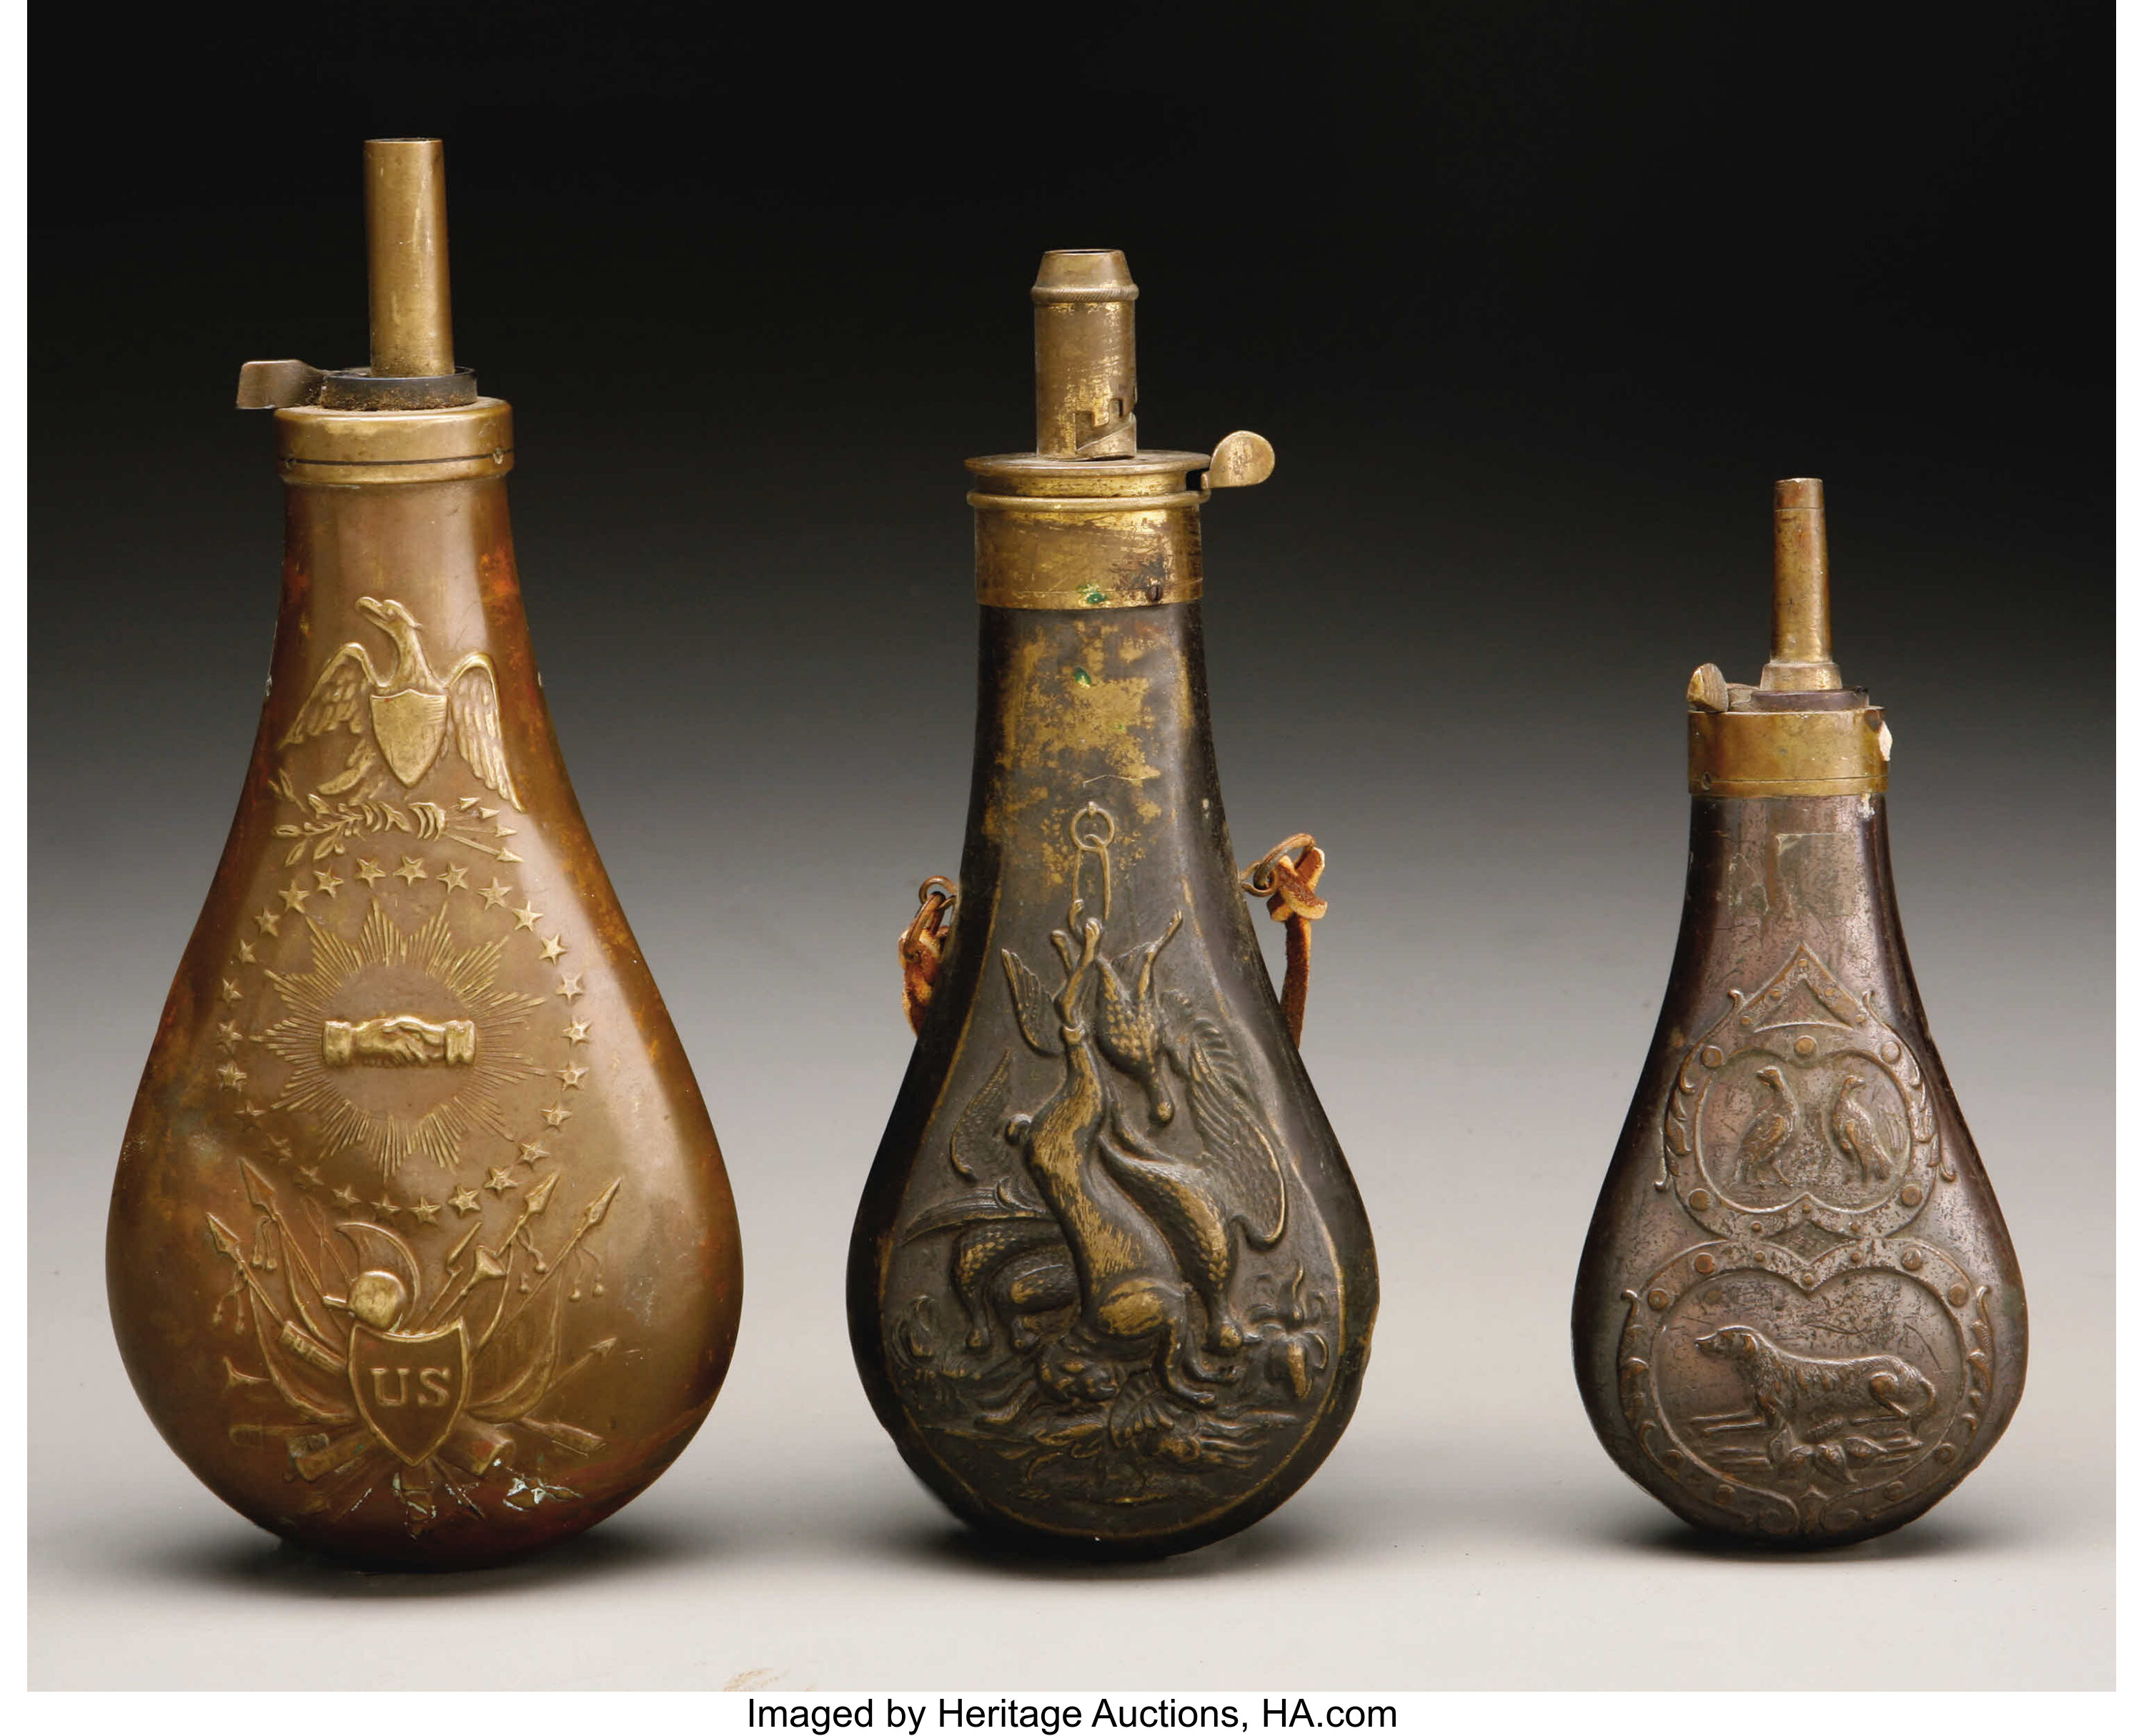 Sold at Auction: Antique Brass Civil War Peace Powder Flask